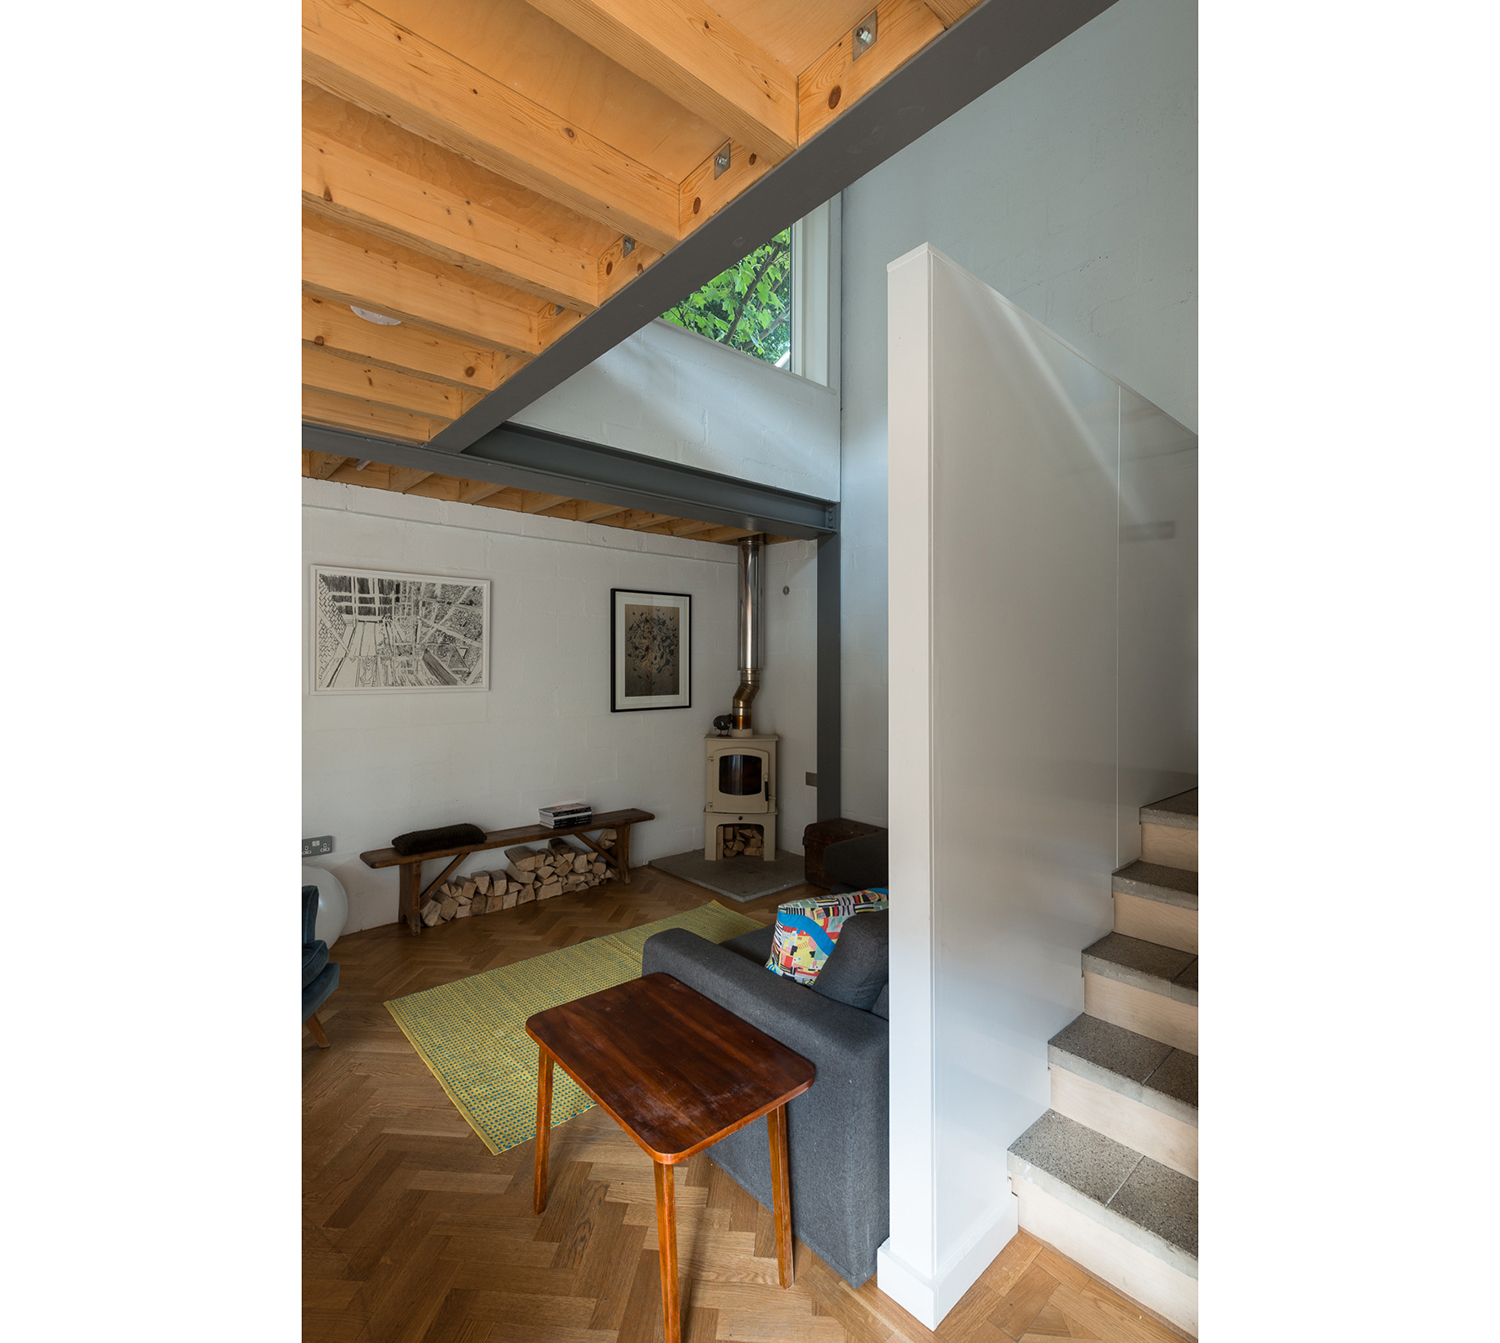 Kyverdale-Hackney-House-N16-Prewett-Bizley-Architects-grand-designs-11.jpg